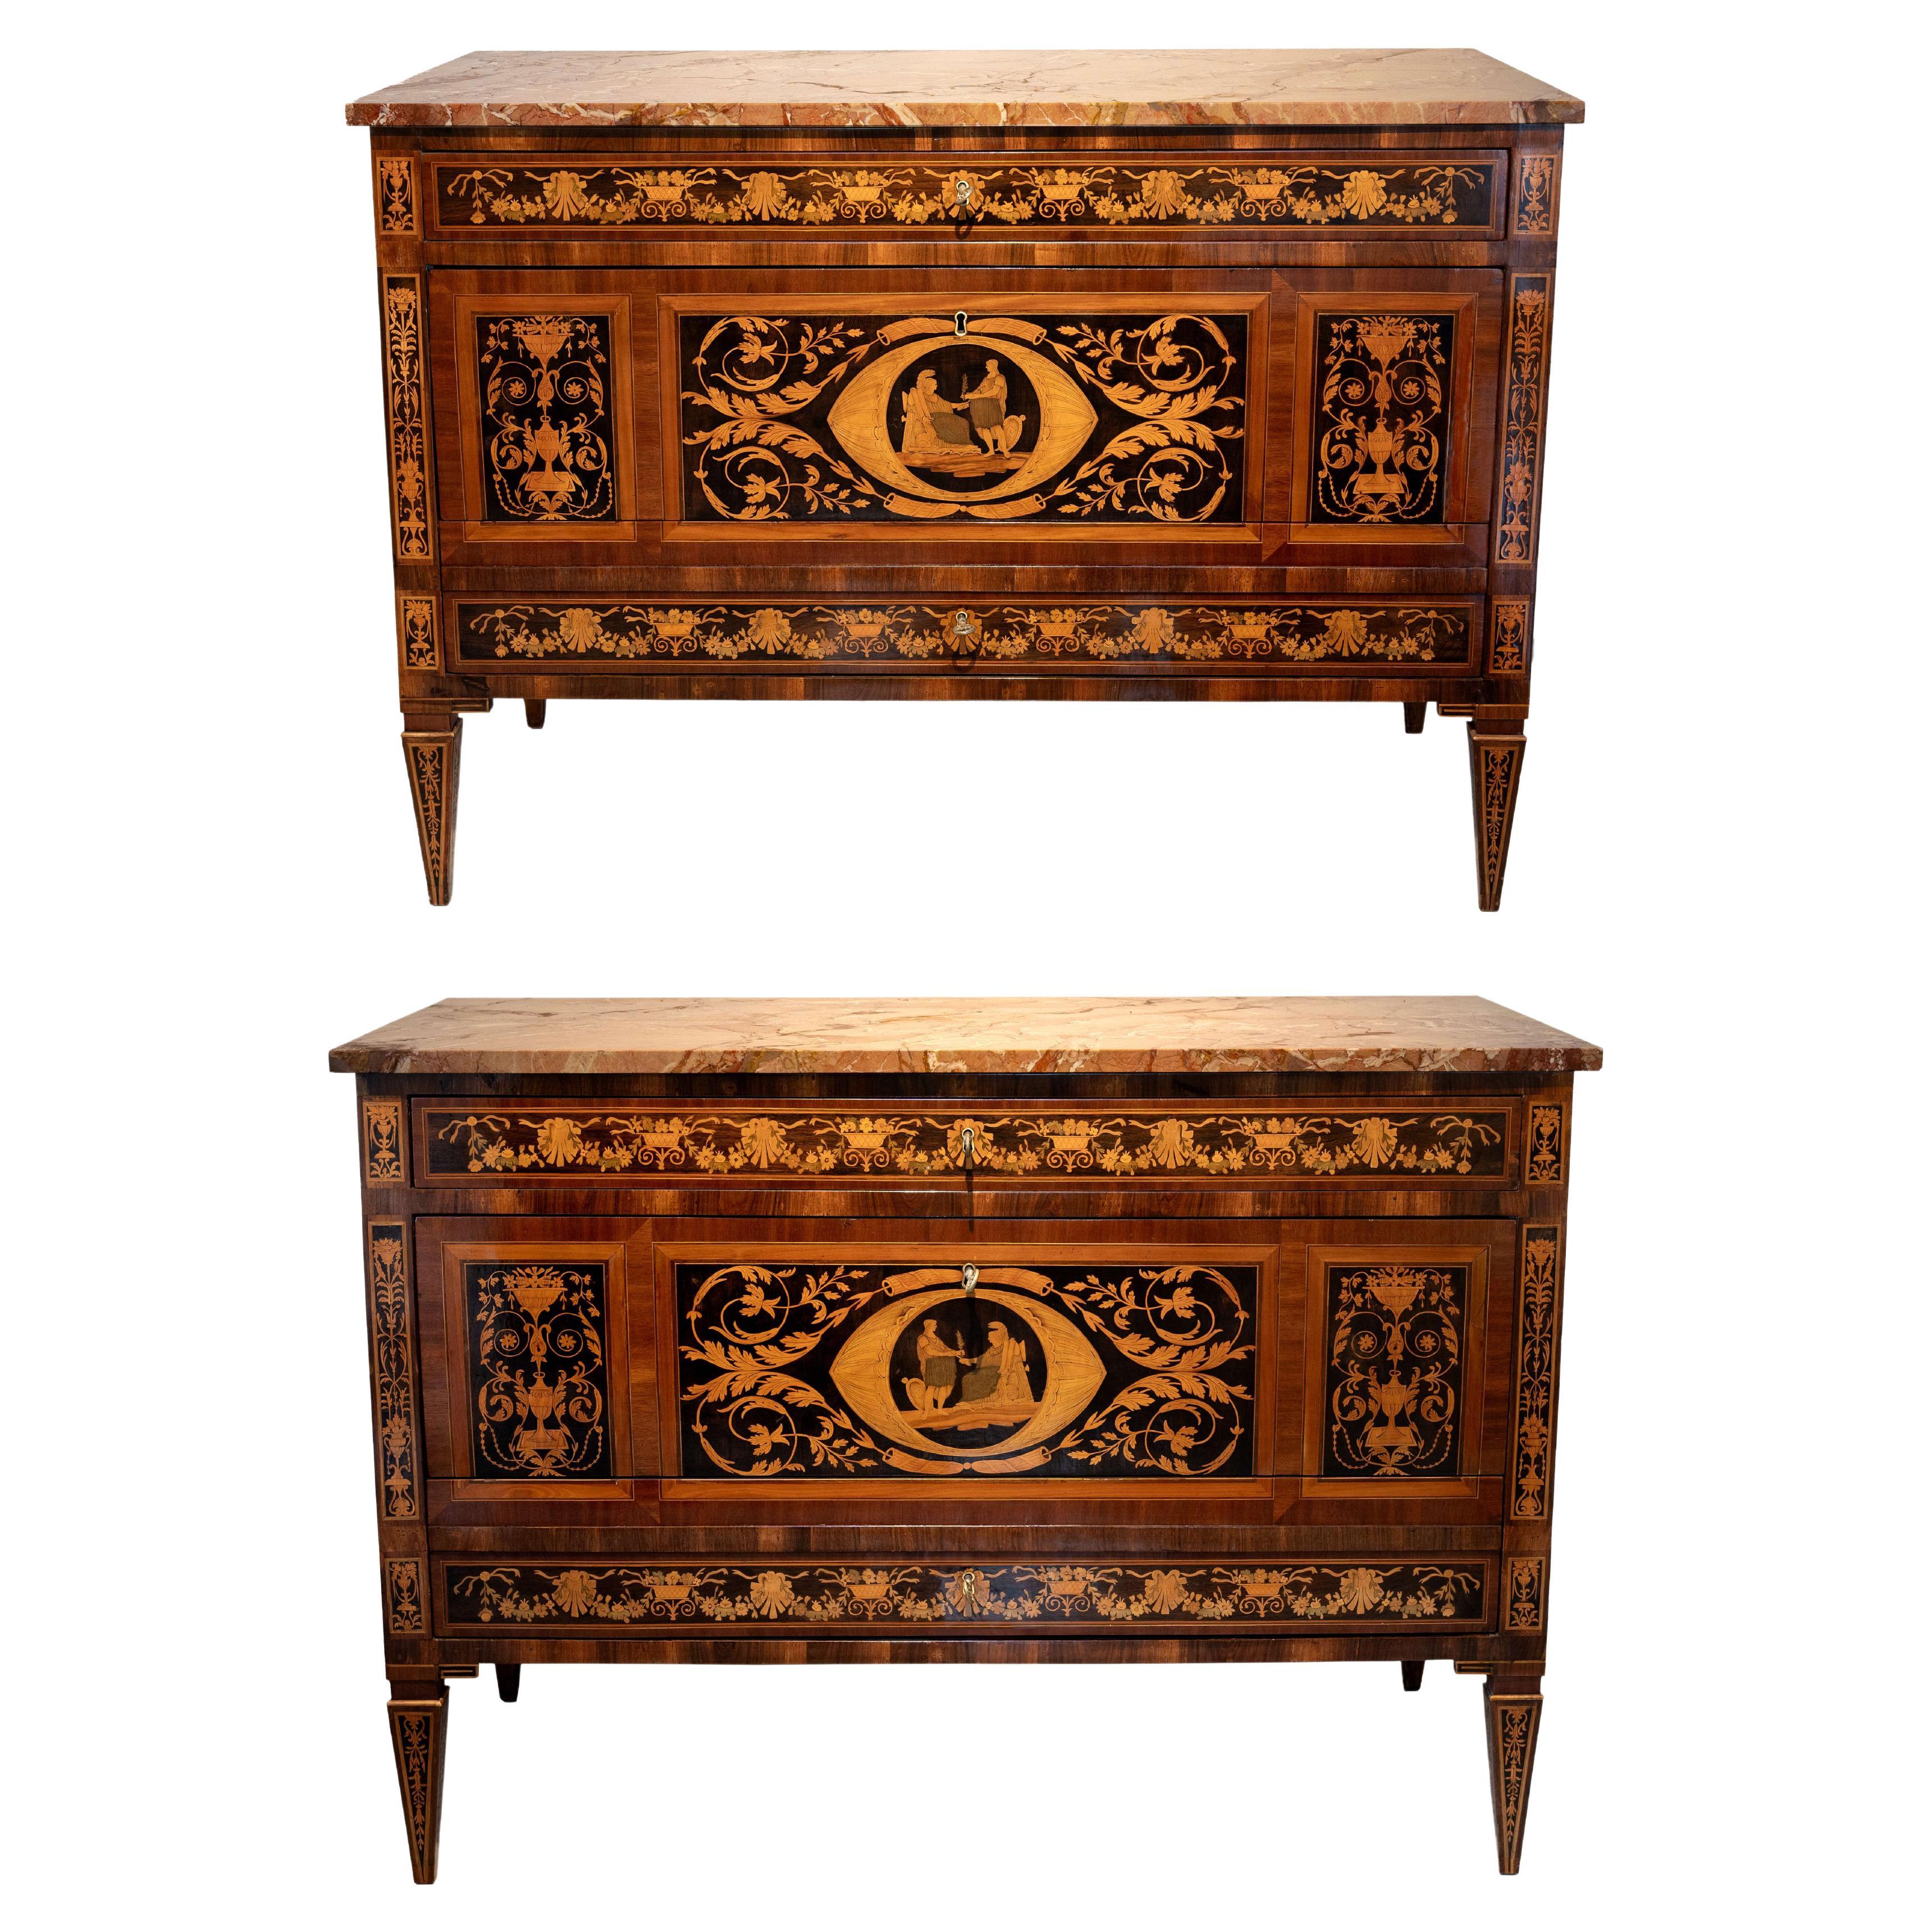 Pair of neoclassical Italian chests of drawers in inlaid wood, XVIII century